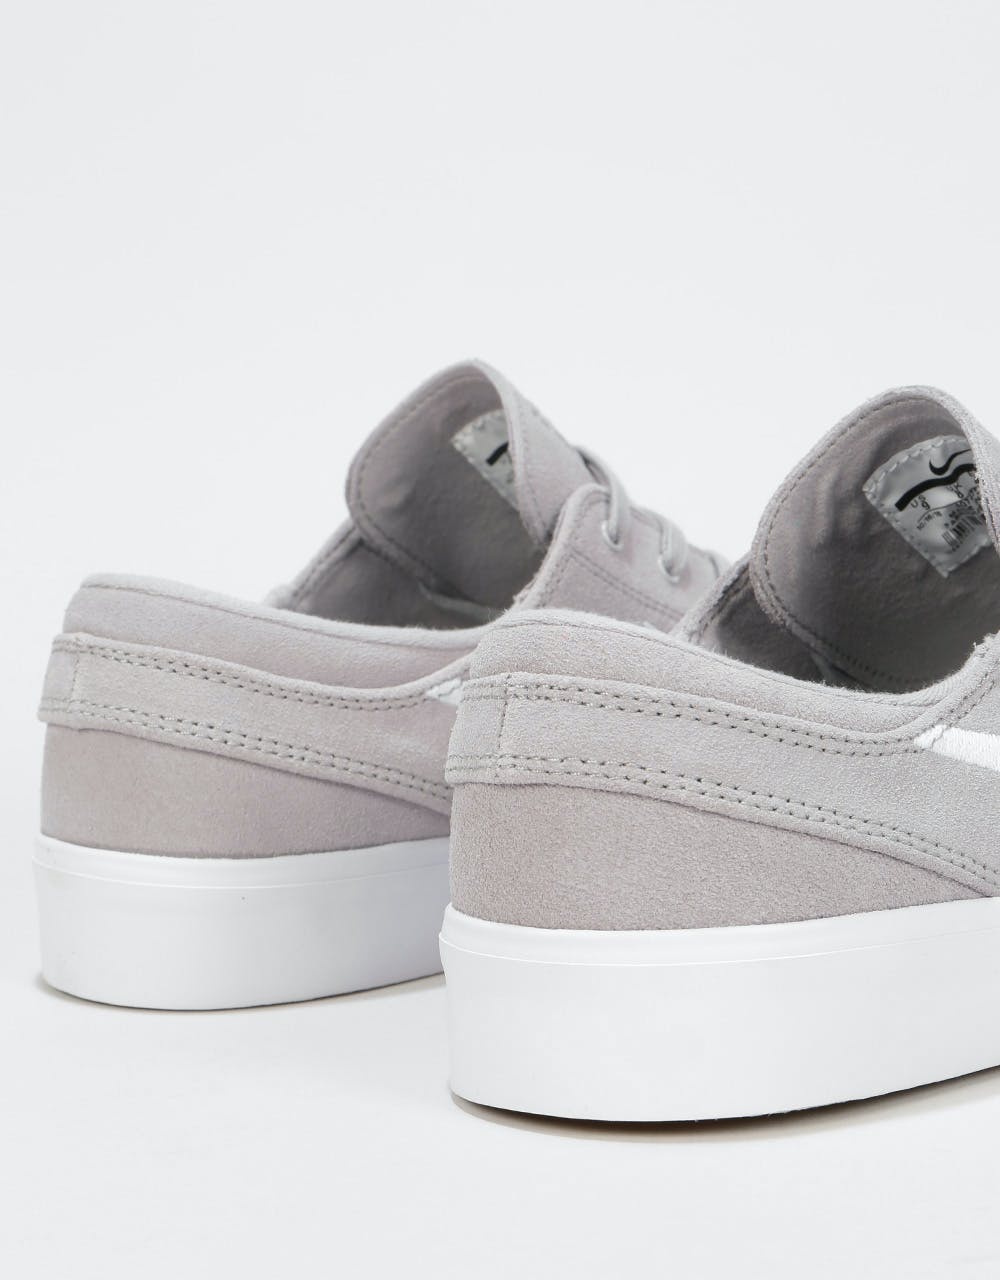 Nike SB Zoom Janoski RM Skate Shoes - Atmosphere Grey/White-Dark Grey